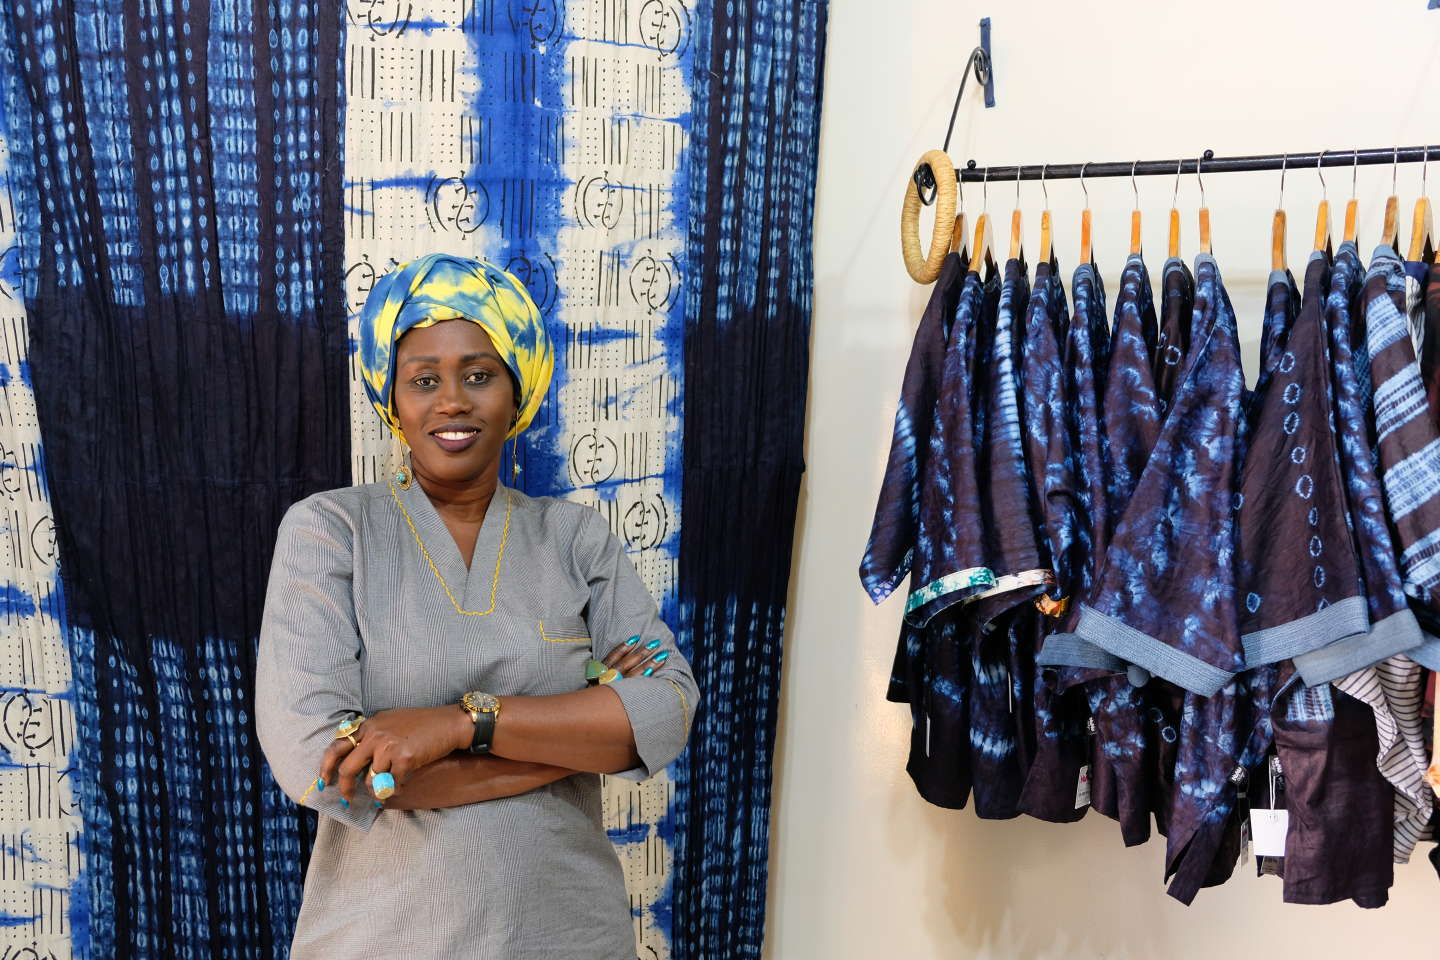 In Senegal, Marie Madeleine Diouf sees fashion in indigo